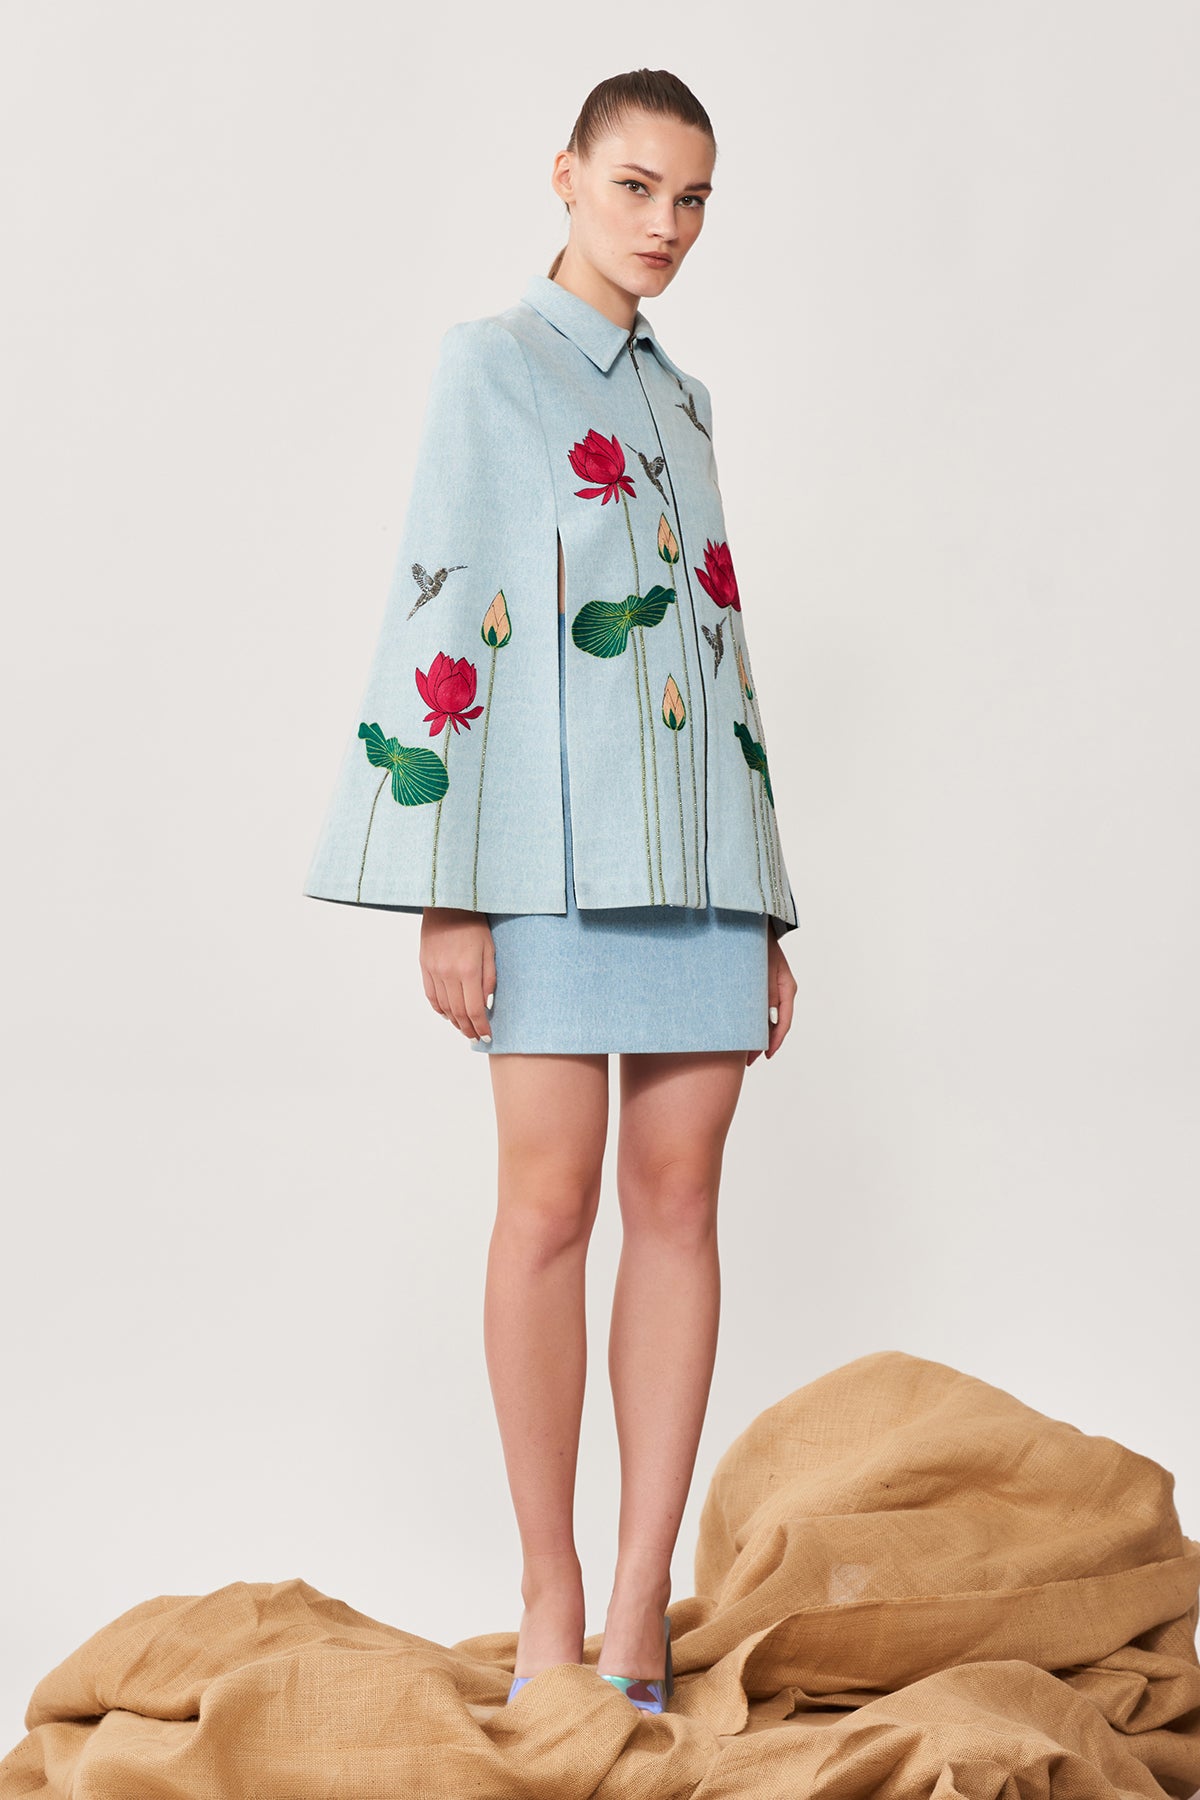 Lotus & Humming Bird Cape With Mini Skirt